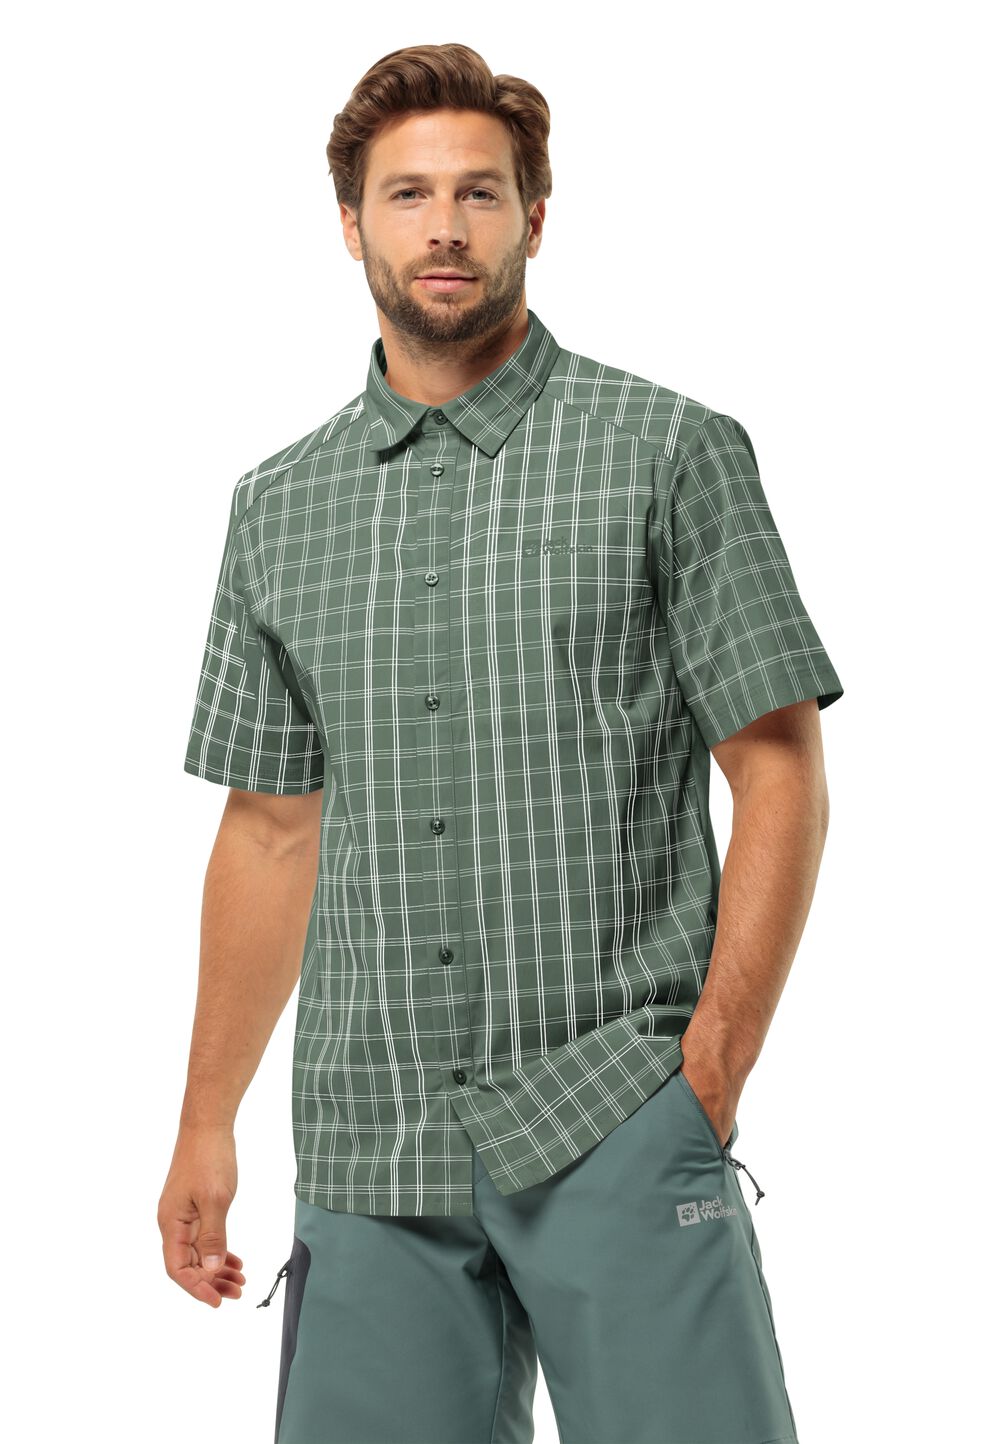 Jack Wolfskin Norbo S S Shirt Men Overhemd met korte mouwen Heren XL hedge green checks hedge green checks